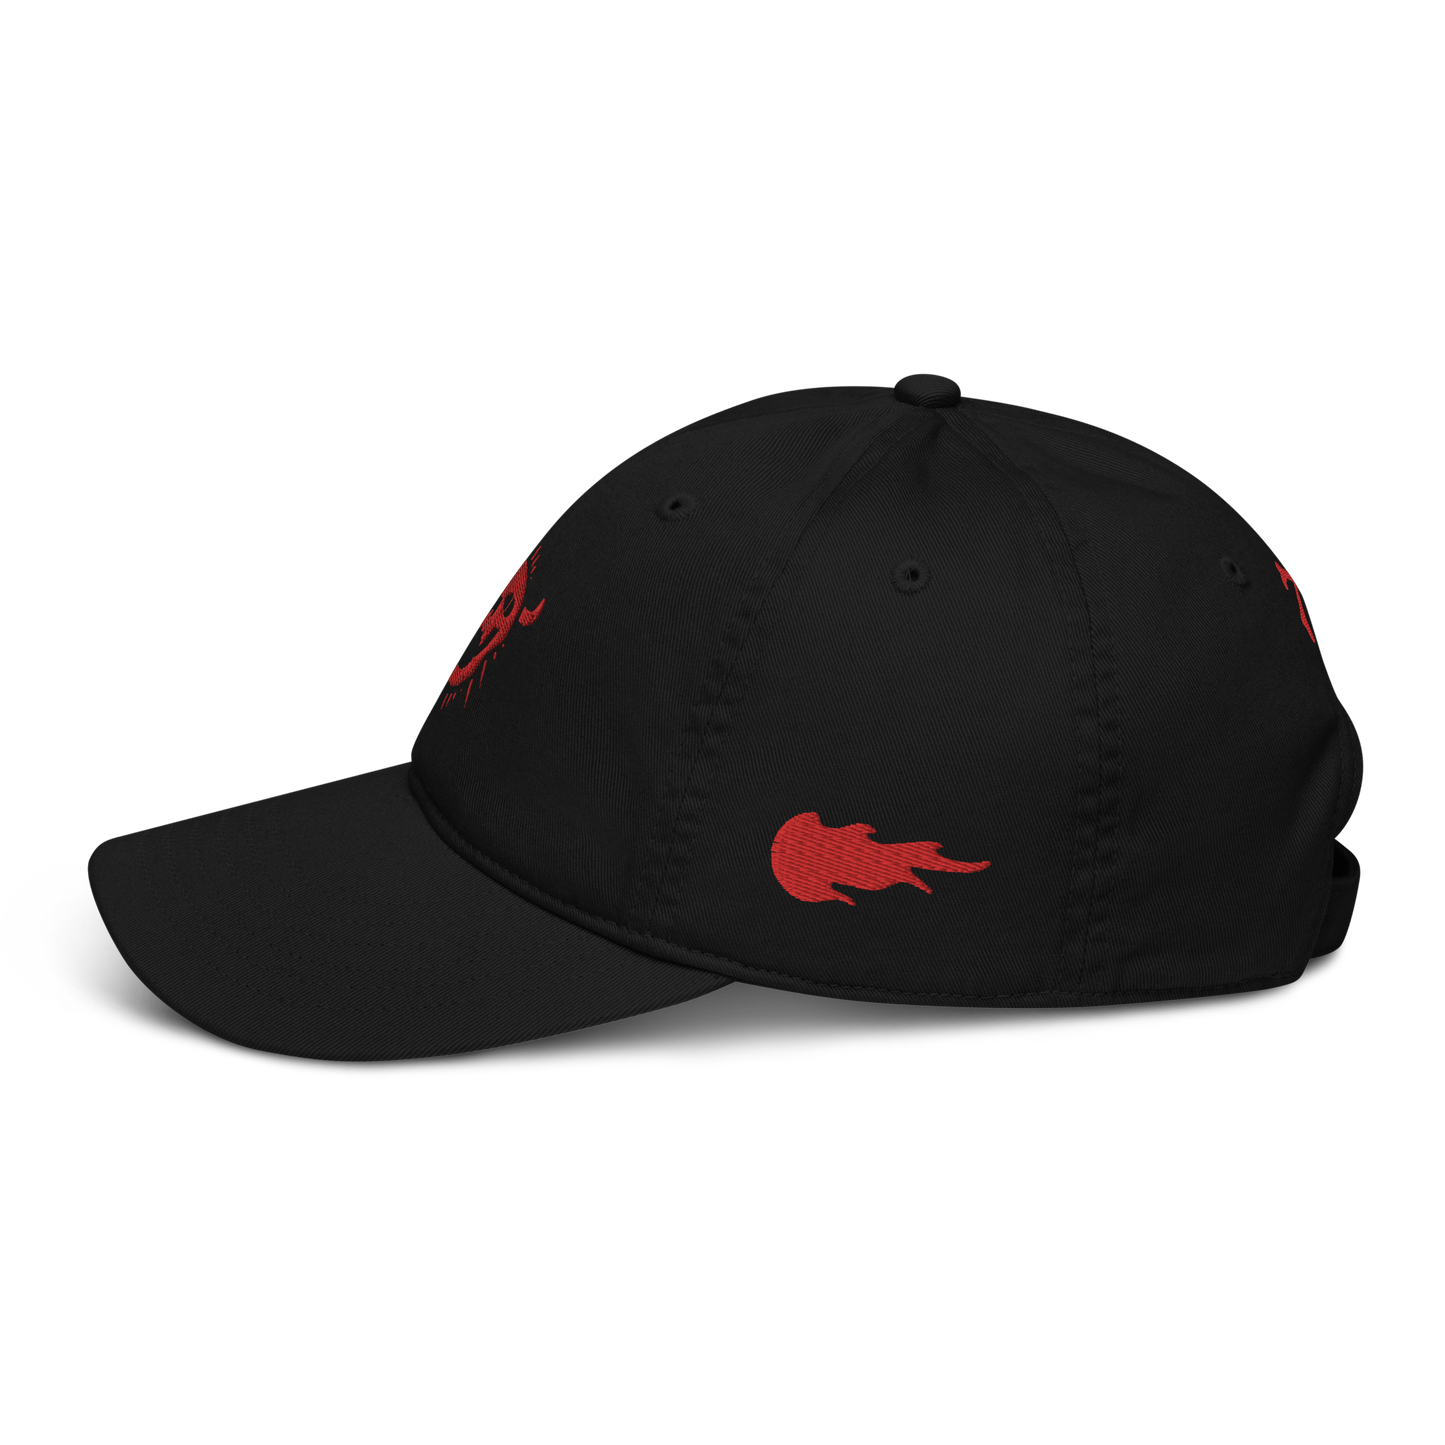 The Crimson Firebrand Cap